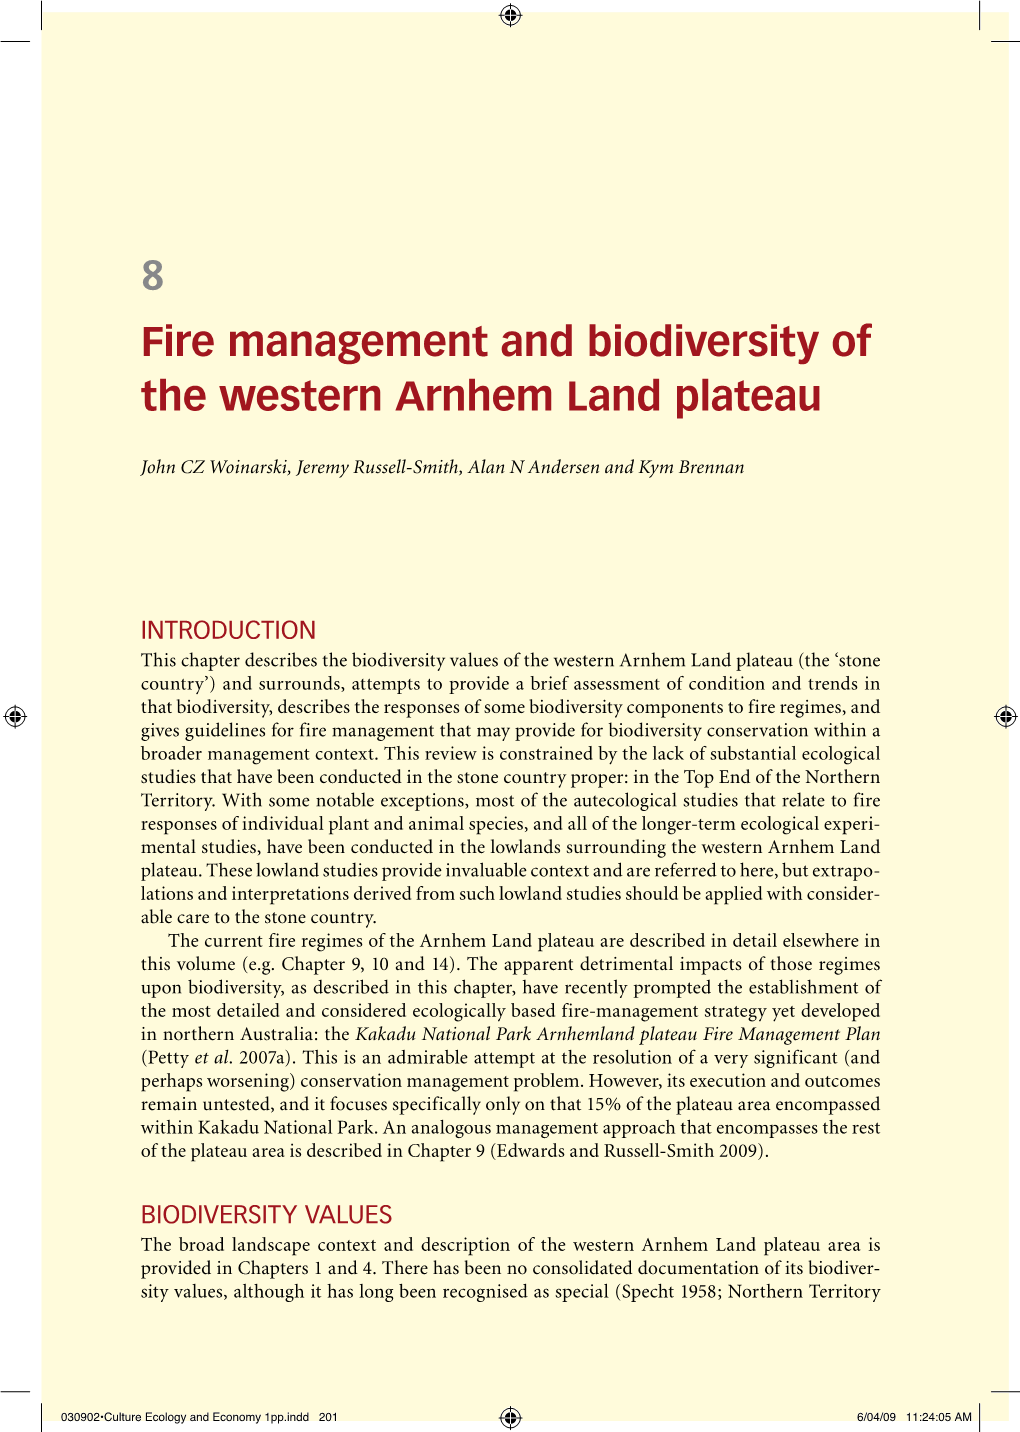 8 Fire Management and Biodiversity of the Western Arnhem Land Plateau